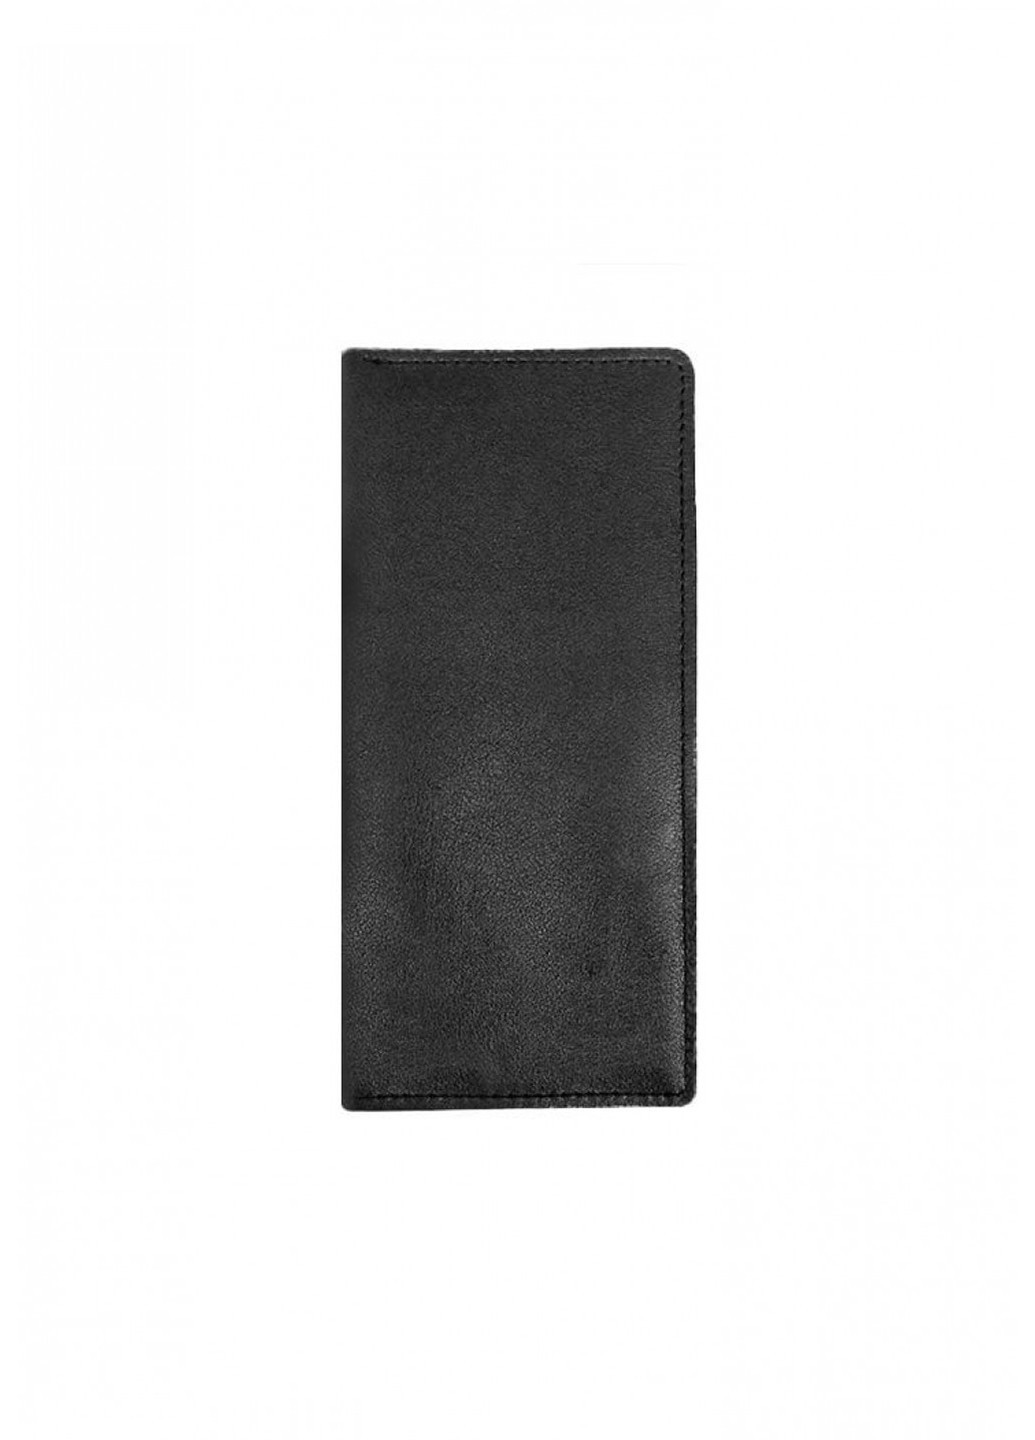 Кожаное мужское портмоне 12.0 черное Краст BN-PM-12-G BlankNote (263605894)